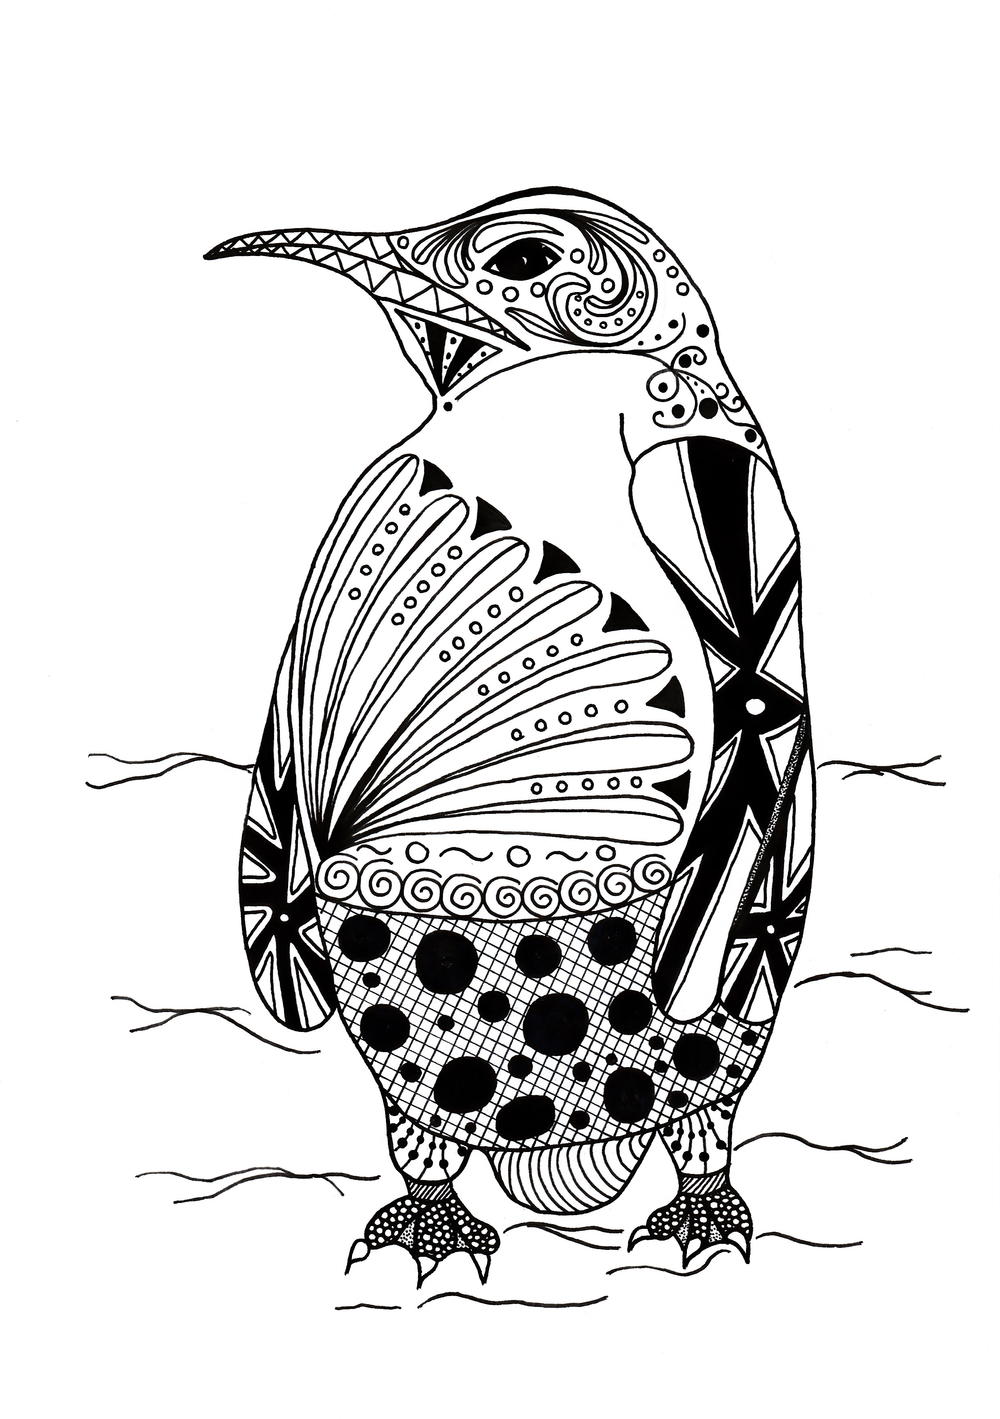 Intricate Penguin Adult Coloring Page | FaveCrafts.com